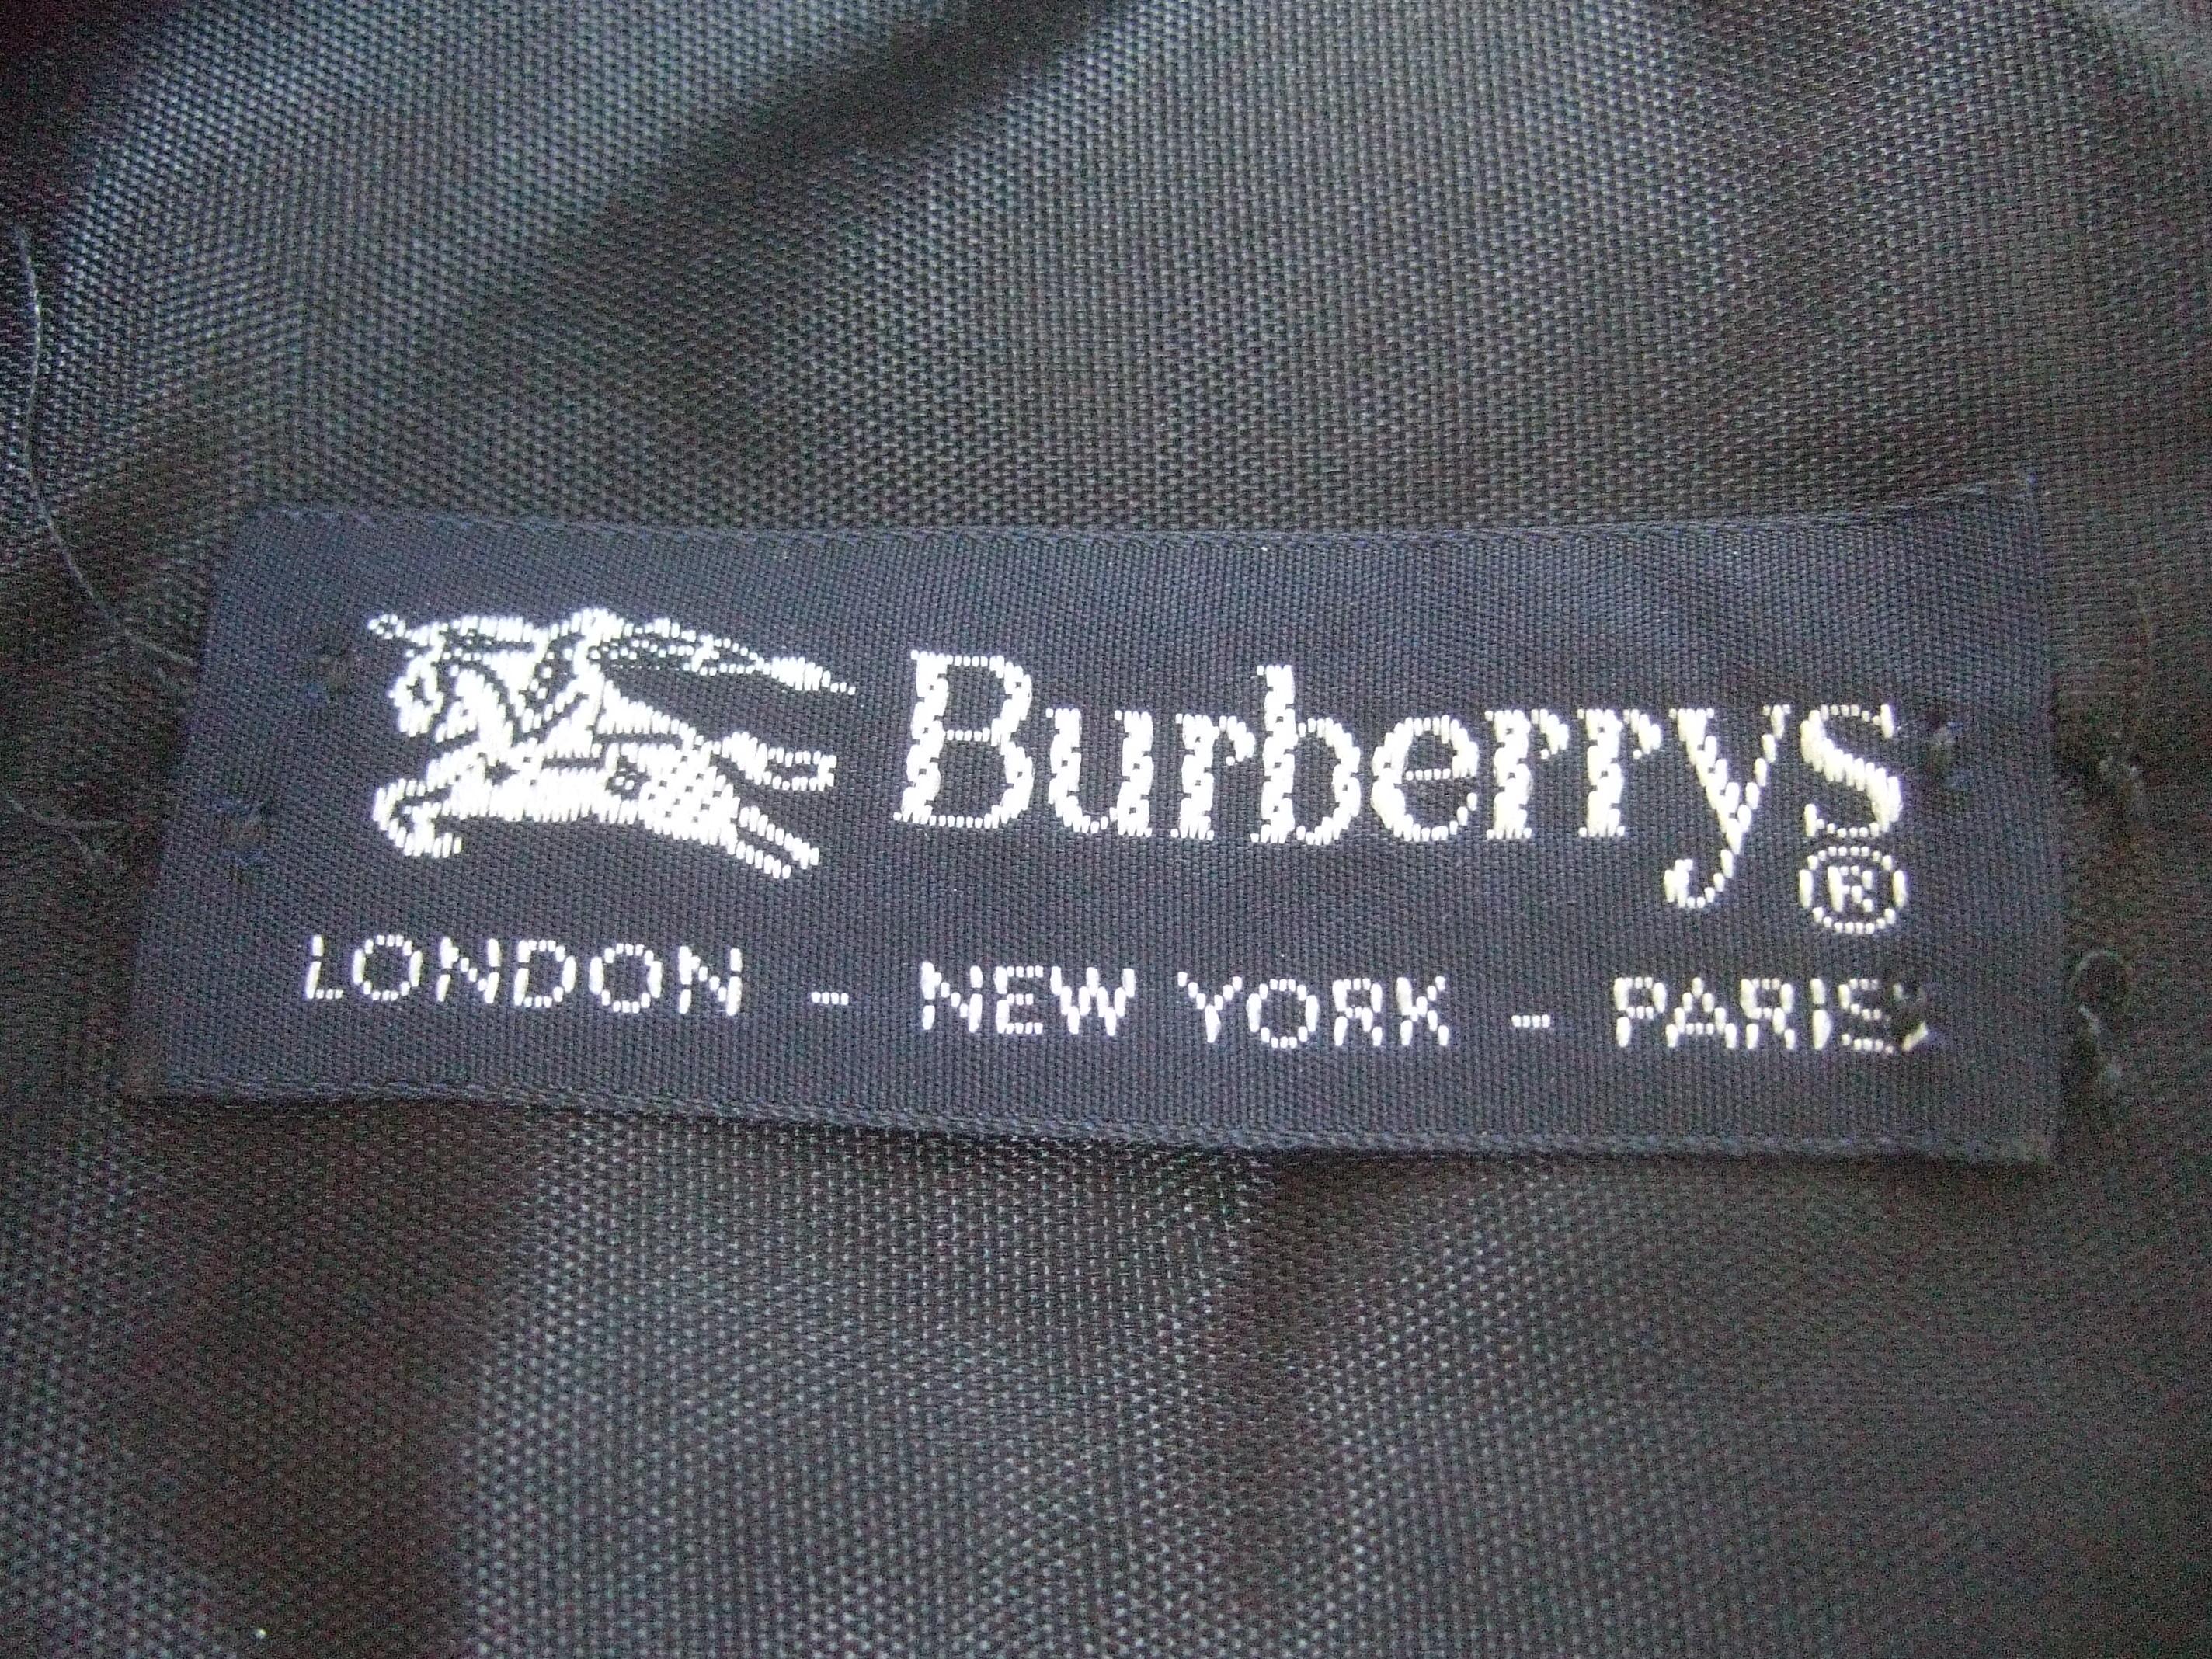 Burberry's Men's Red & Black Tartan Plaid Silk Cummerbund Bow Tie Set c 1980s  1